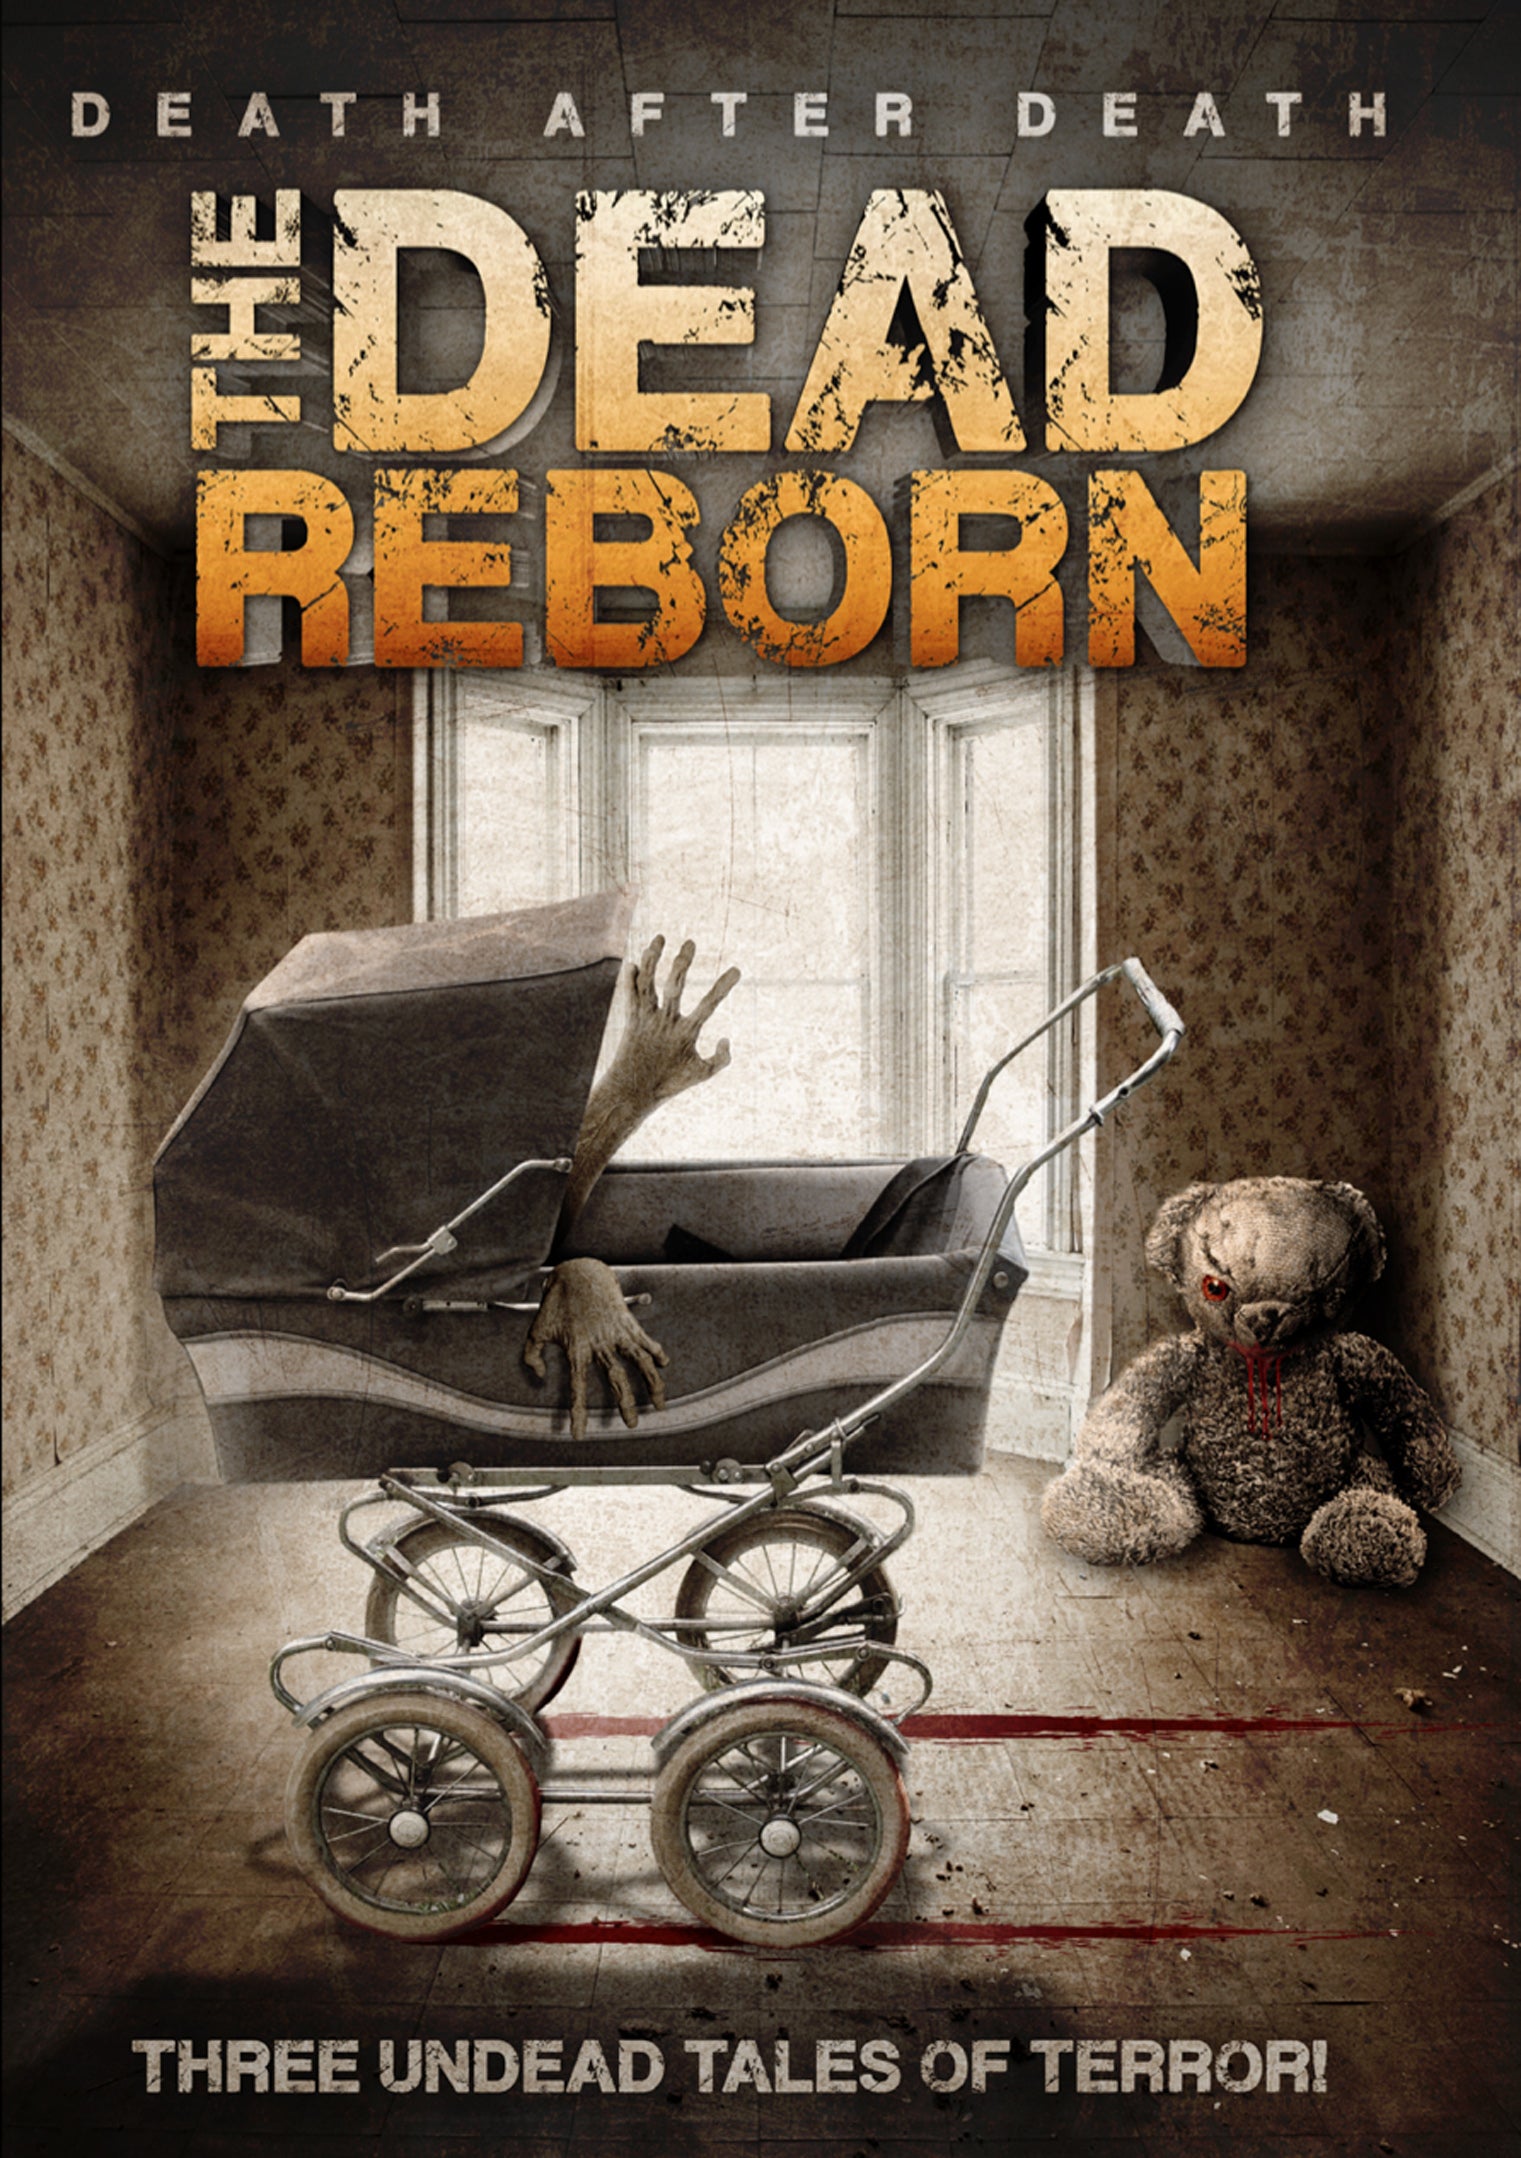 THE DEAD REBORN DVD